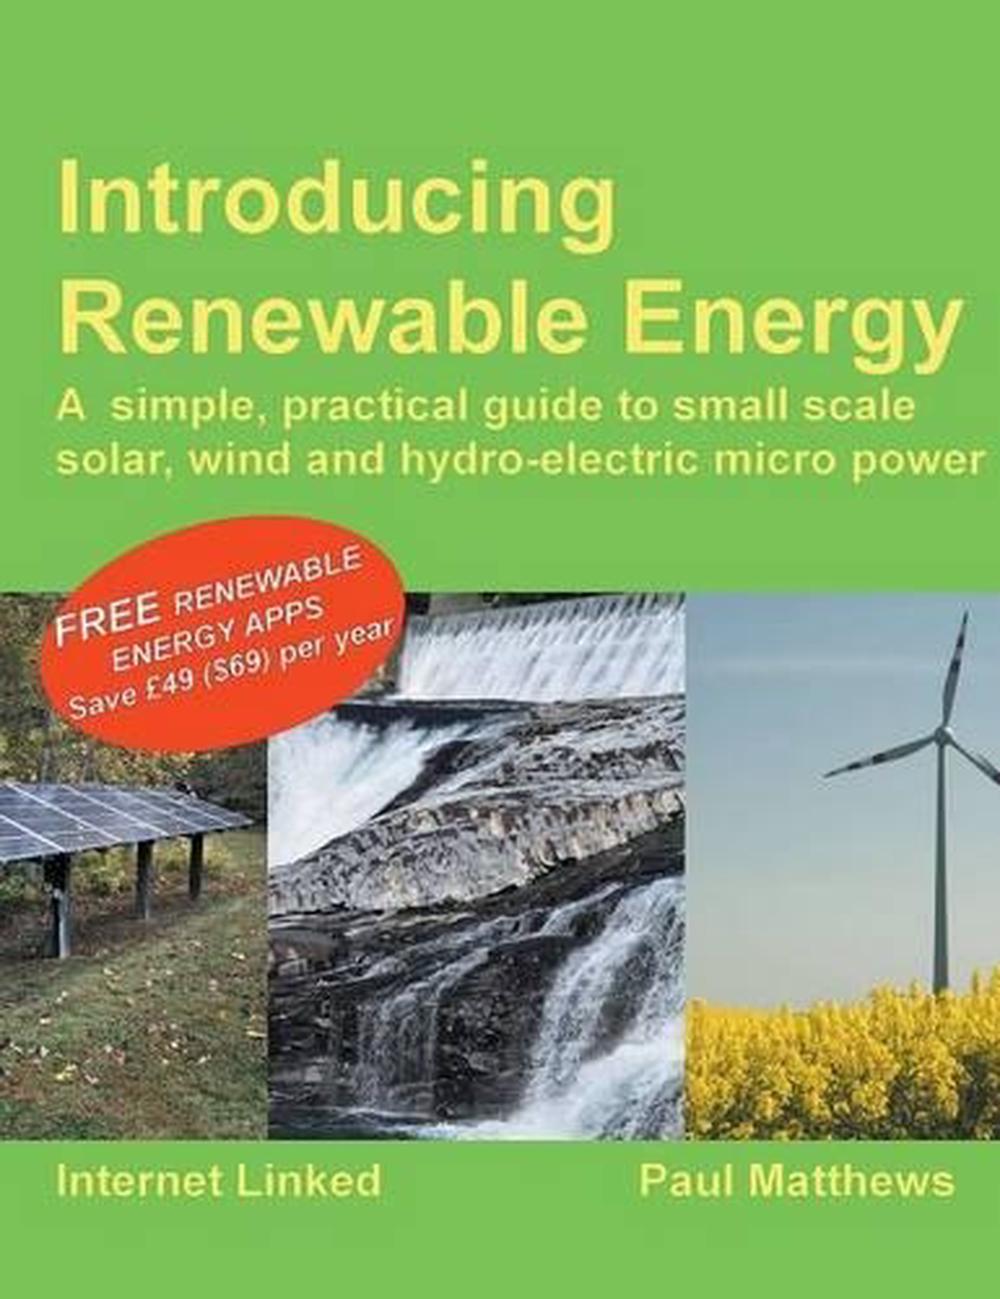 title for renewable energy essay